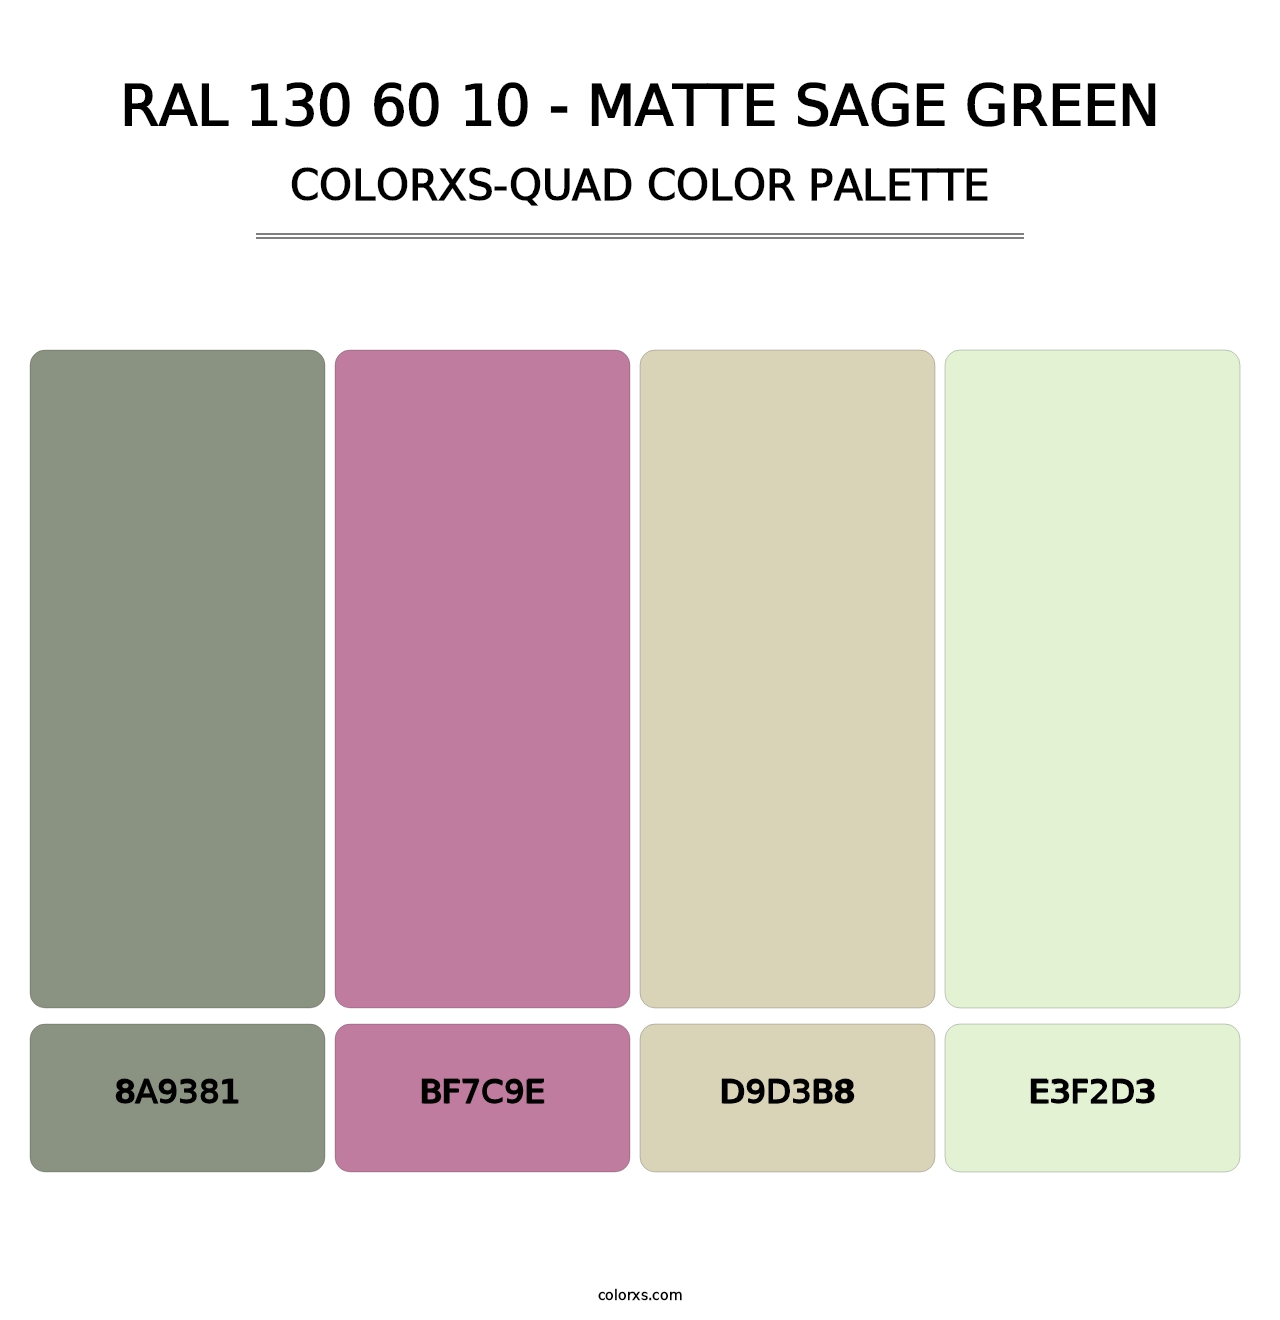 RAL 130 60 10 - Matte Sage Green - Colorxs Quad Palette